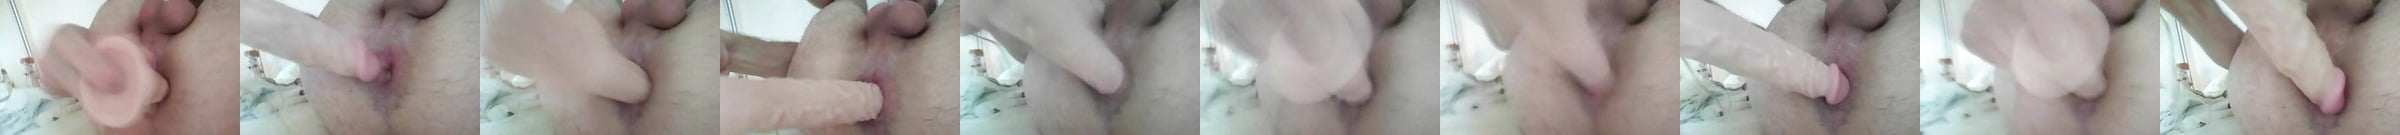 Massage Gun Orgasm Gay Masturbation Hd Porn Video Ce Xhamster